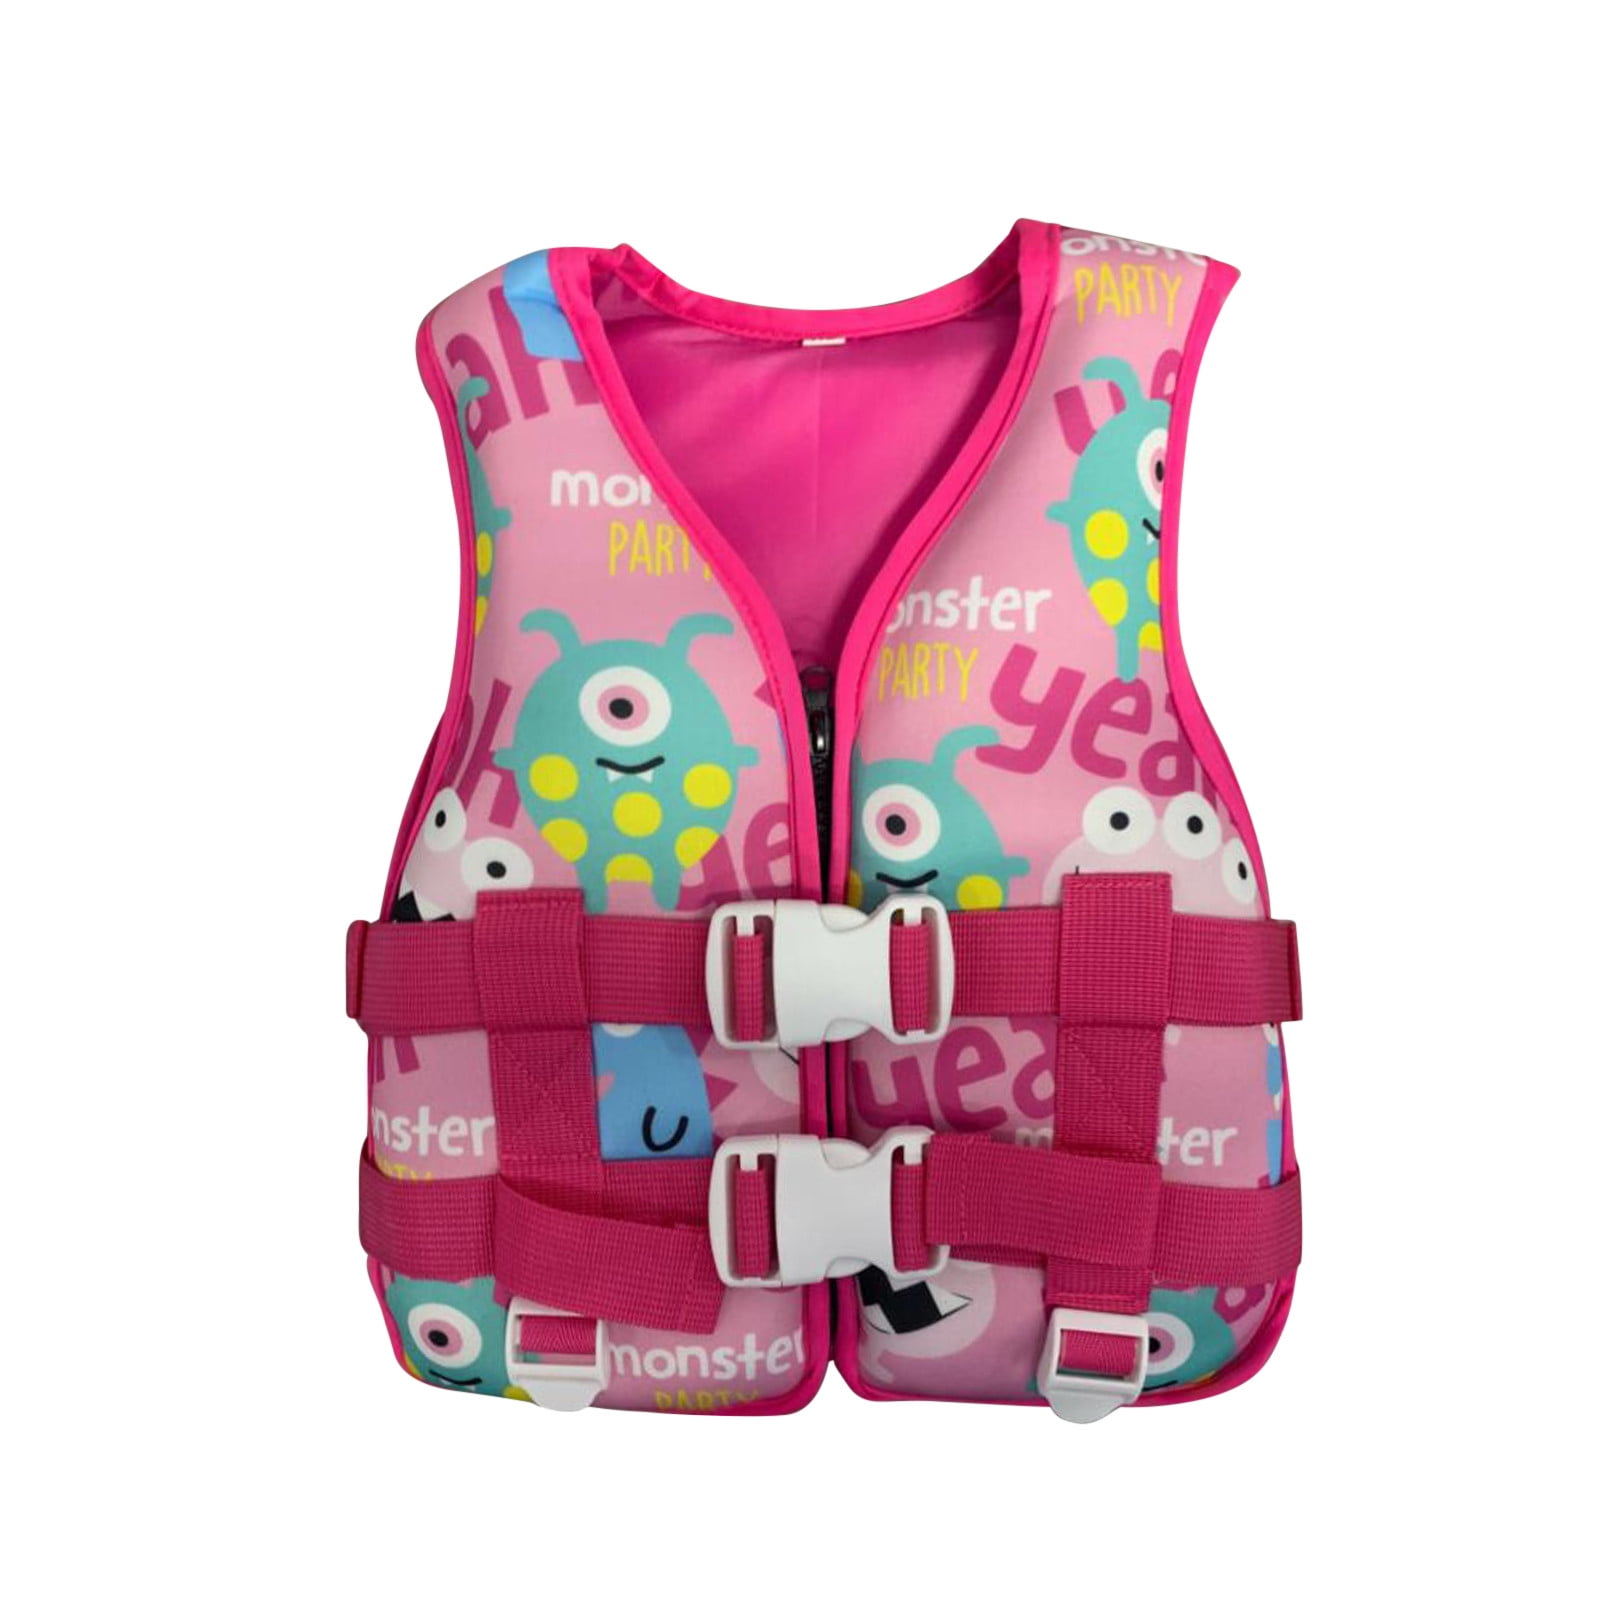 Details about   Children Kids Swim ation Vest Life Jacket Safety Swimming Buoyancy  **. 